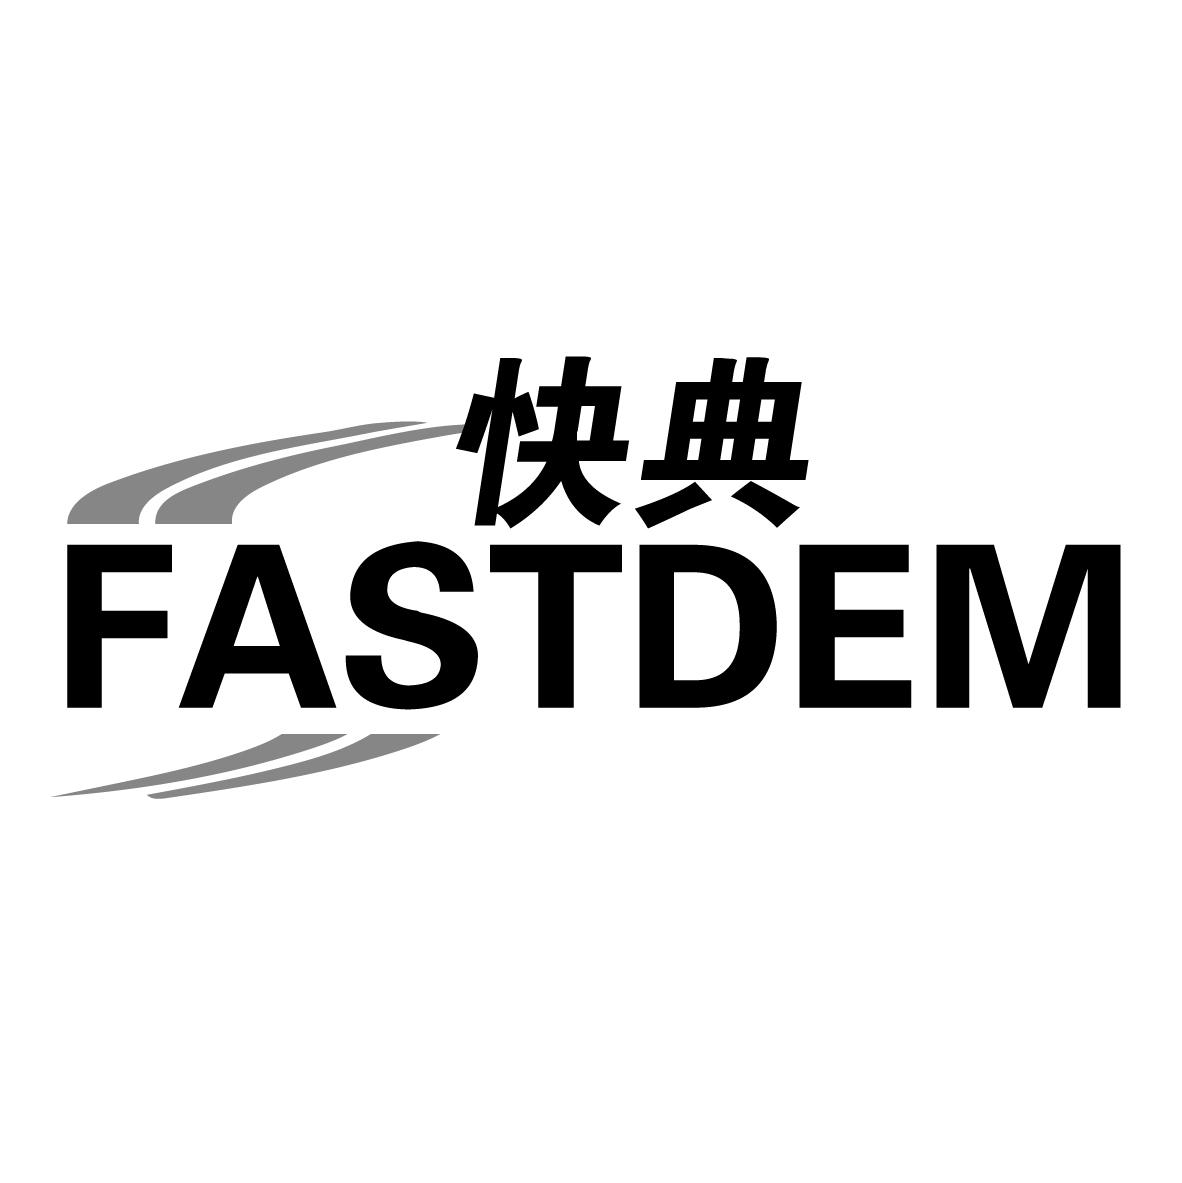  FASTDEM